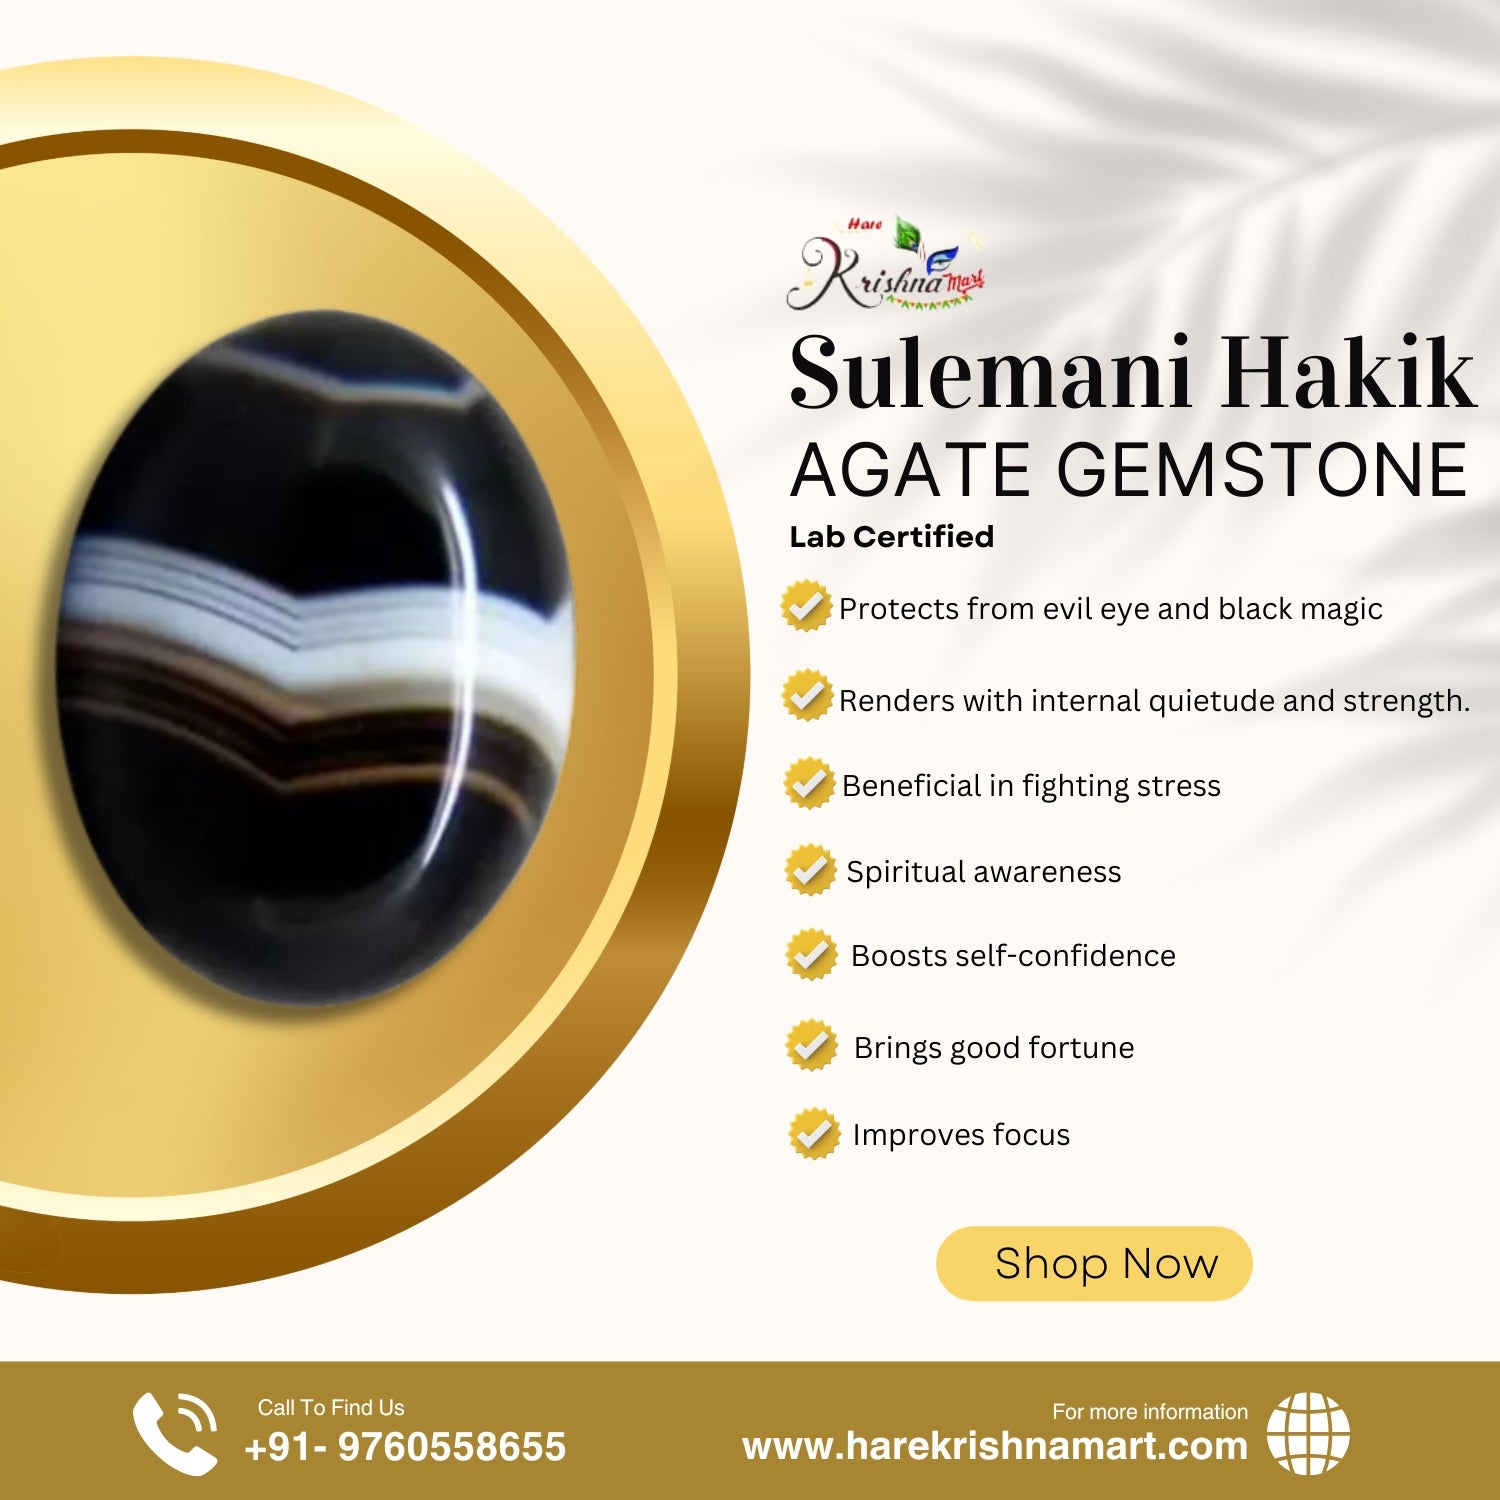 Original African Yellow Sapphire Stone Rare Pukhraj Stone Sterling Silver  Ring | eBay